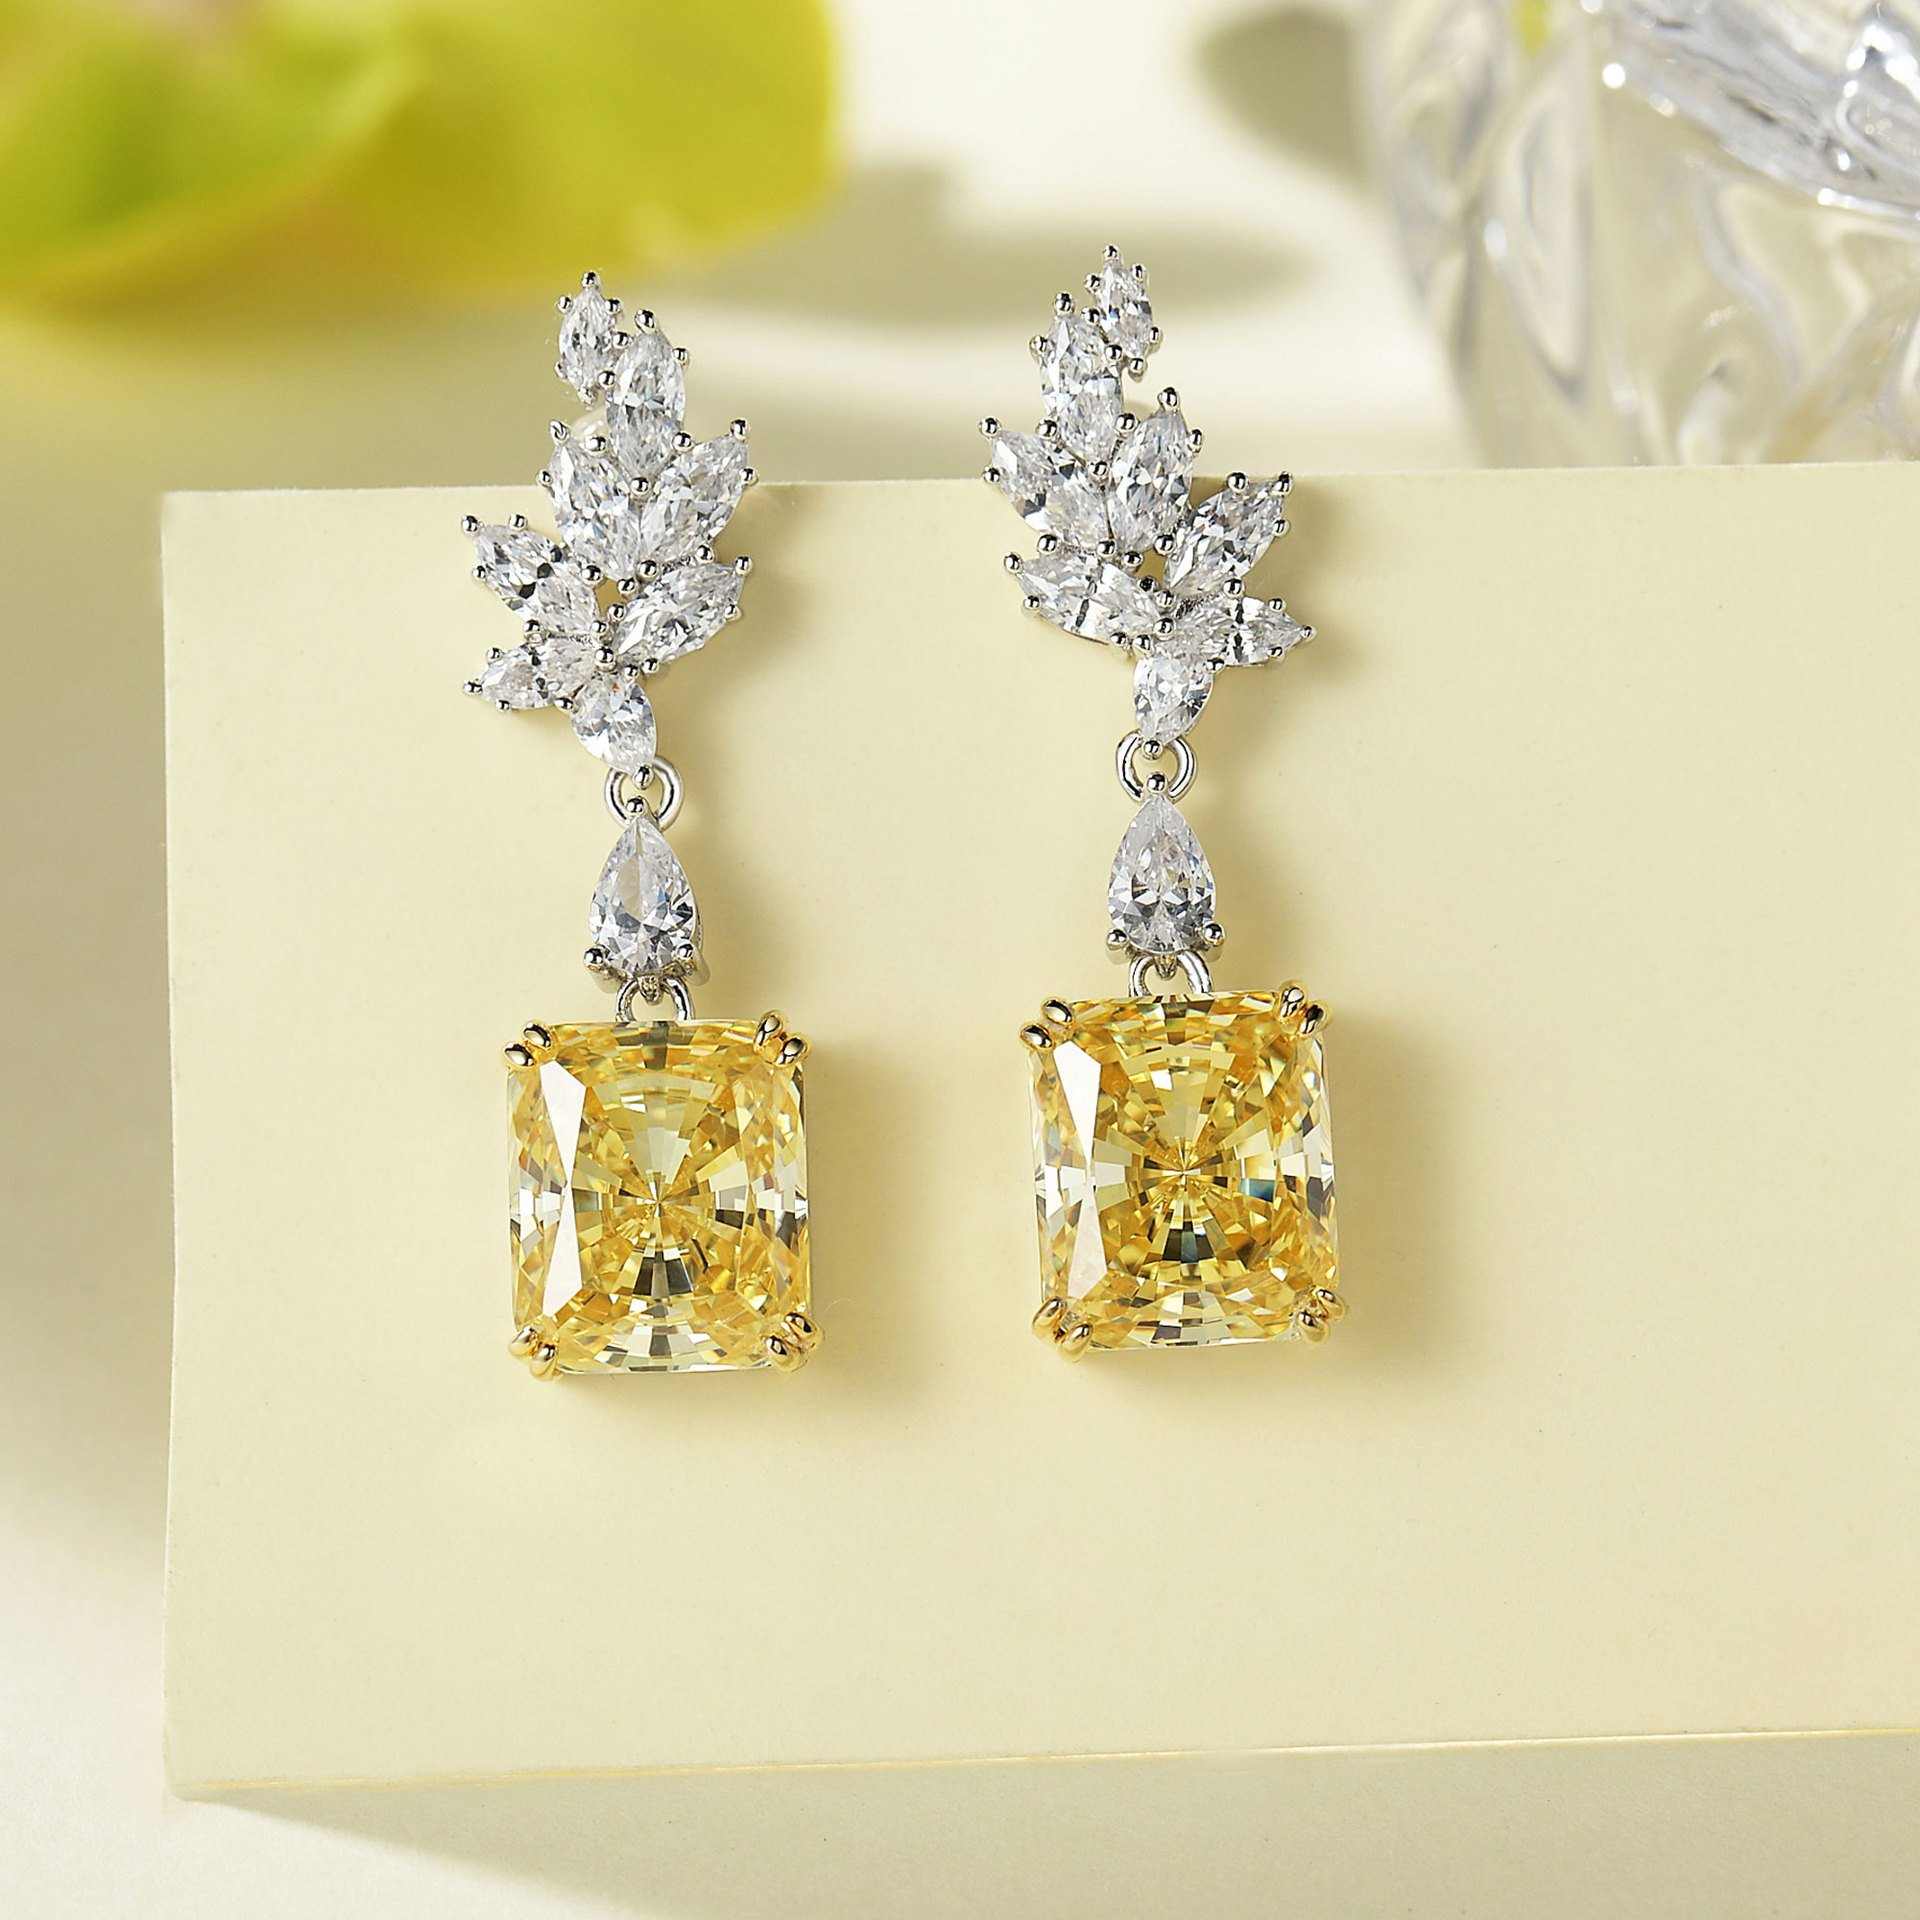 Canary Yellow Diamond Earrings - HERS